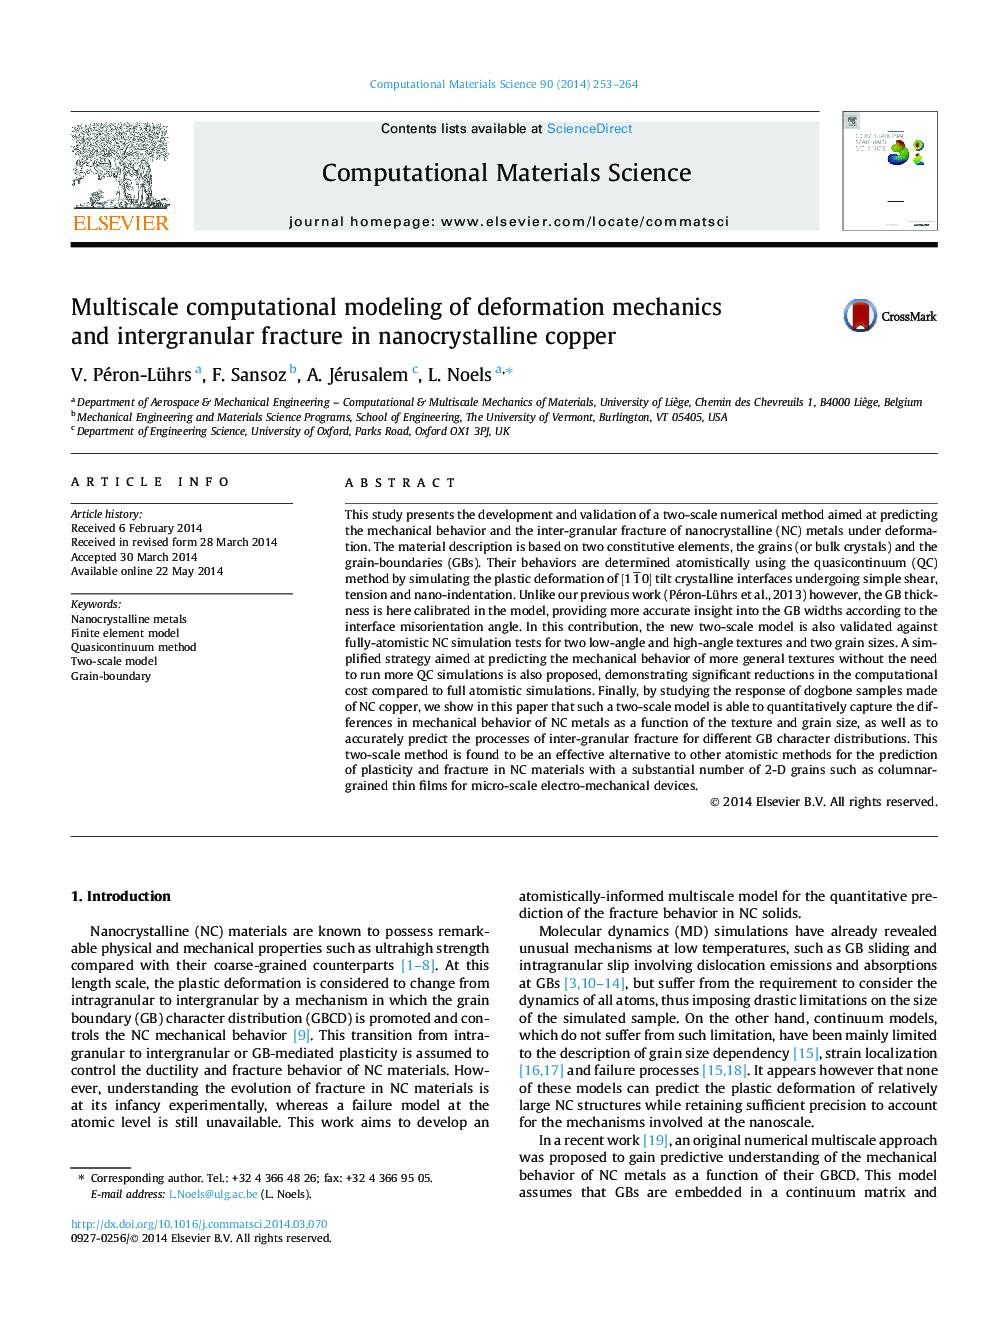 Multiscale computational modeling of deformation mechanics and intergranular fracture in nanocrystalline copper